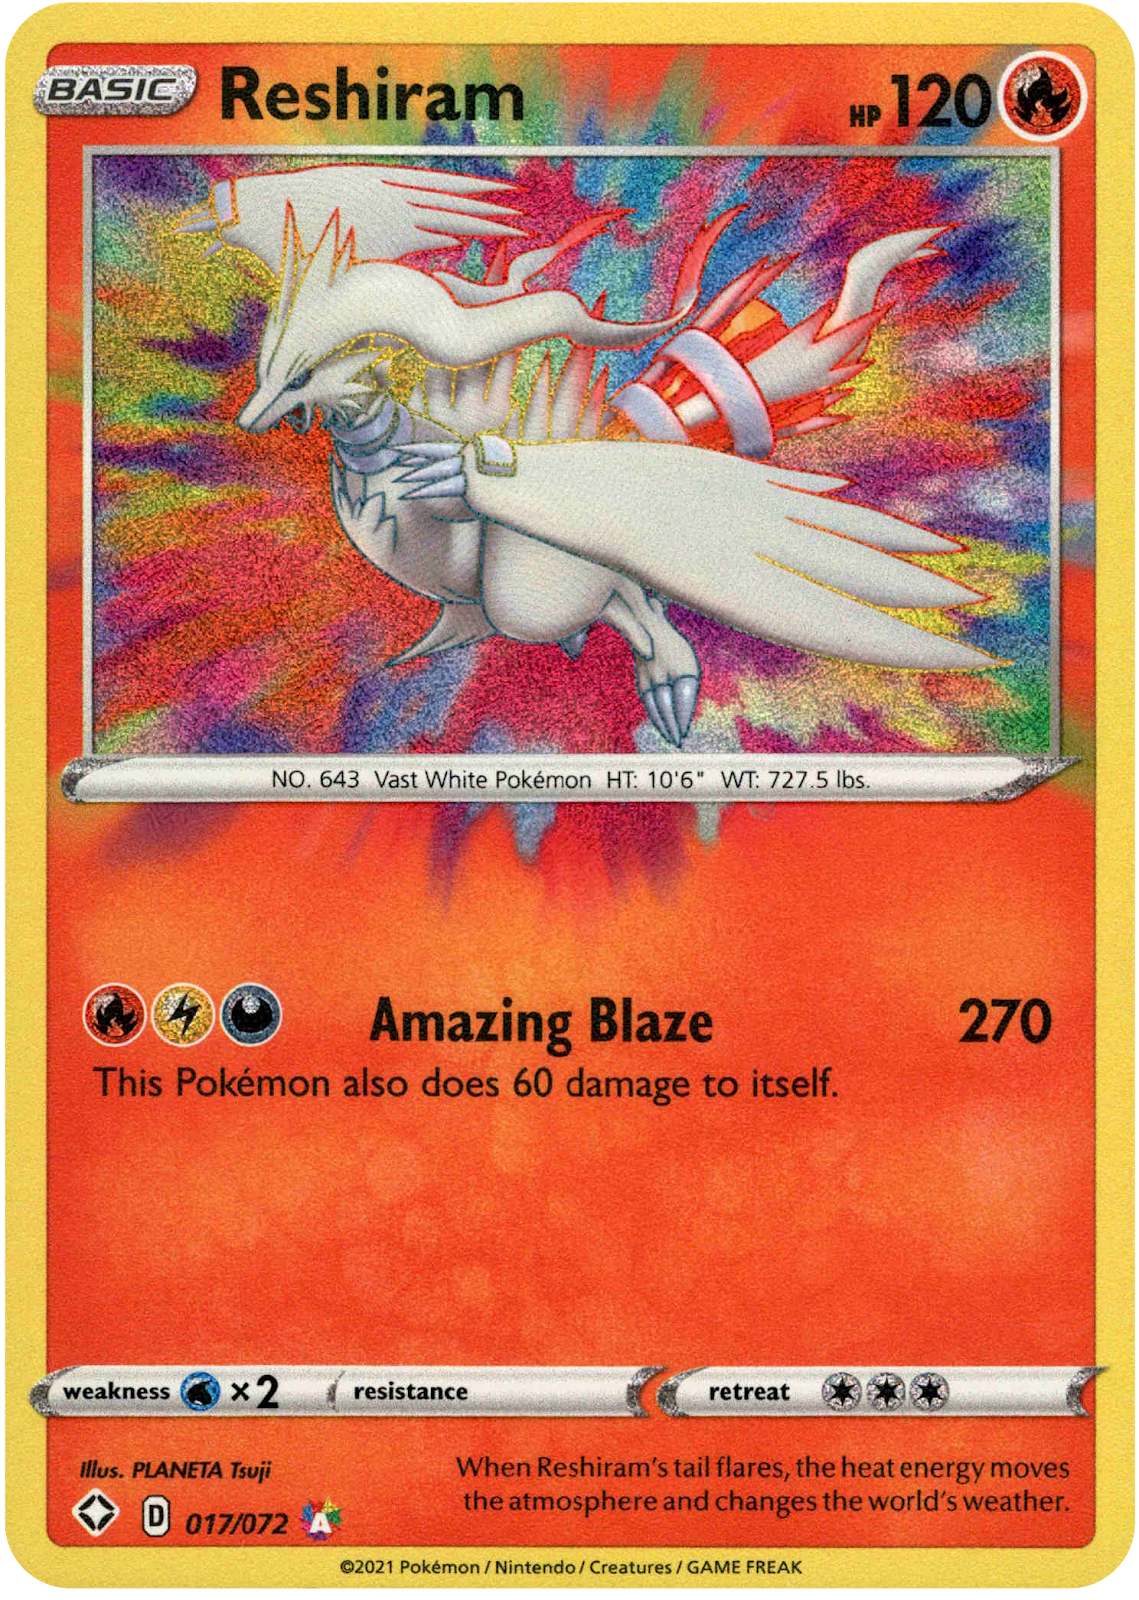 [R][L][D] Amazing Blaze: 270
This Pokémon also does 60 damage to itself.

weakness: [W]×2
resistance:
retreat: 3